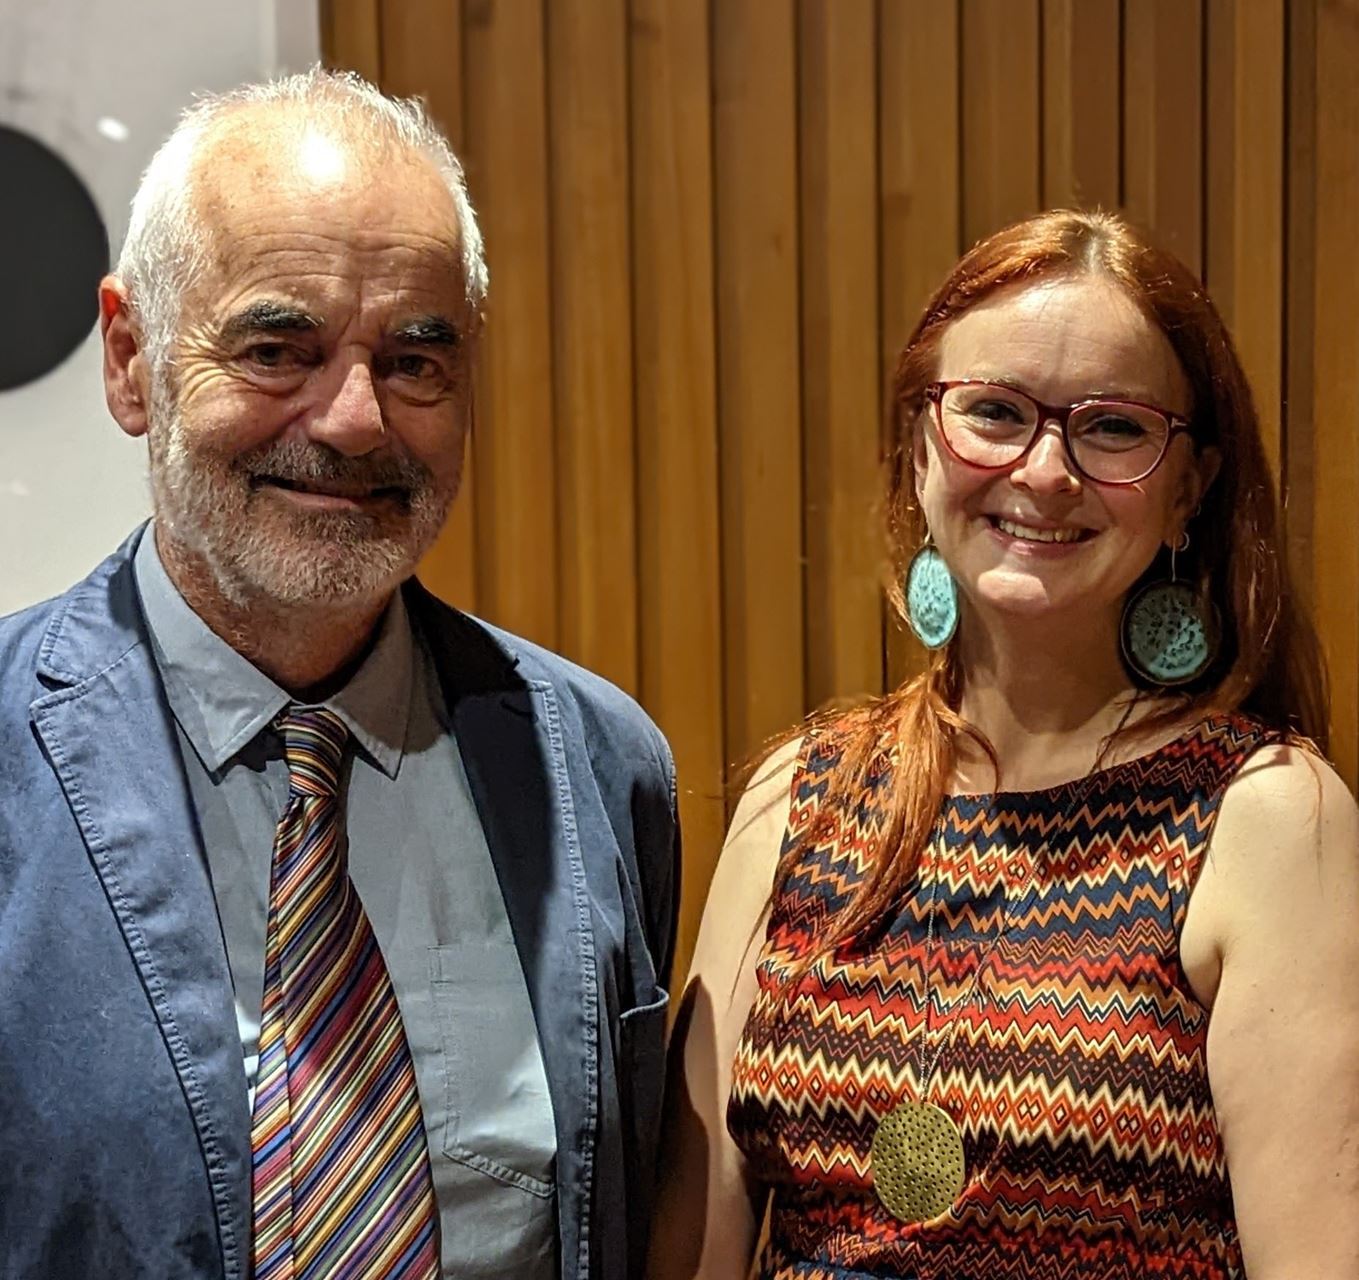 Pictured (left to right): Professor Sir David Spiegelhalter and Karen Lamb, Churchill College, University of Cambridge, Cambridge, November 2022 